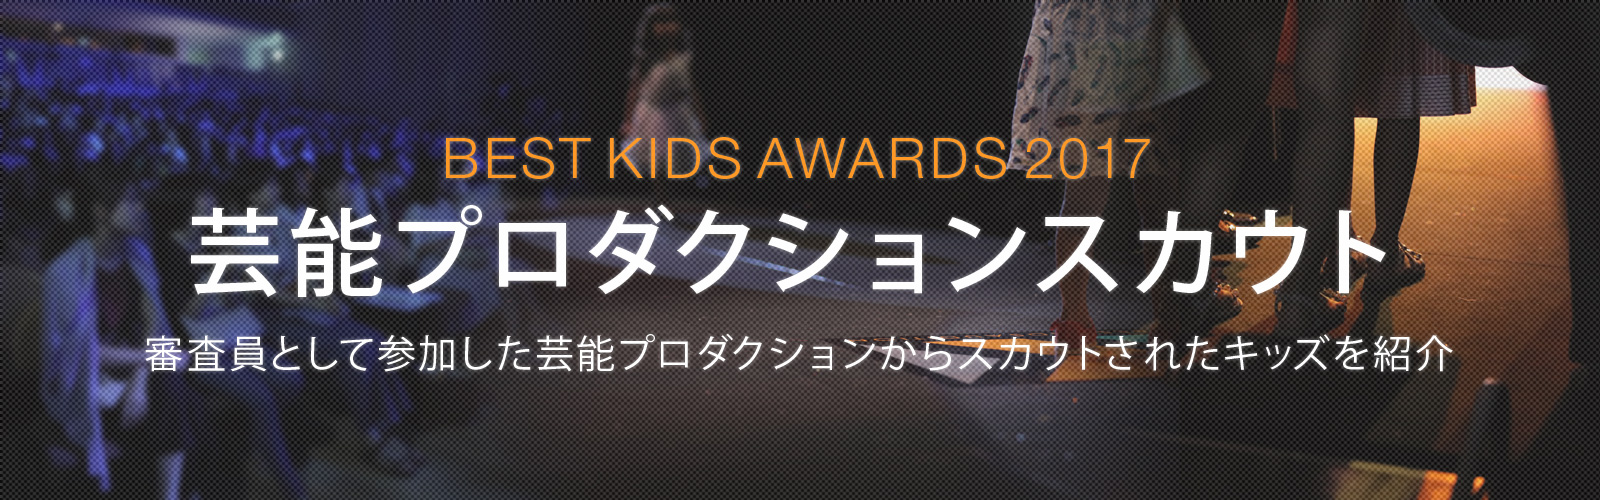 BEST KIDS AWARDS 2017 芸能プロダクションスカウト